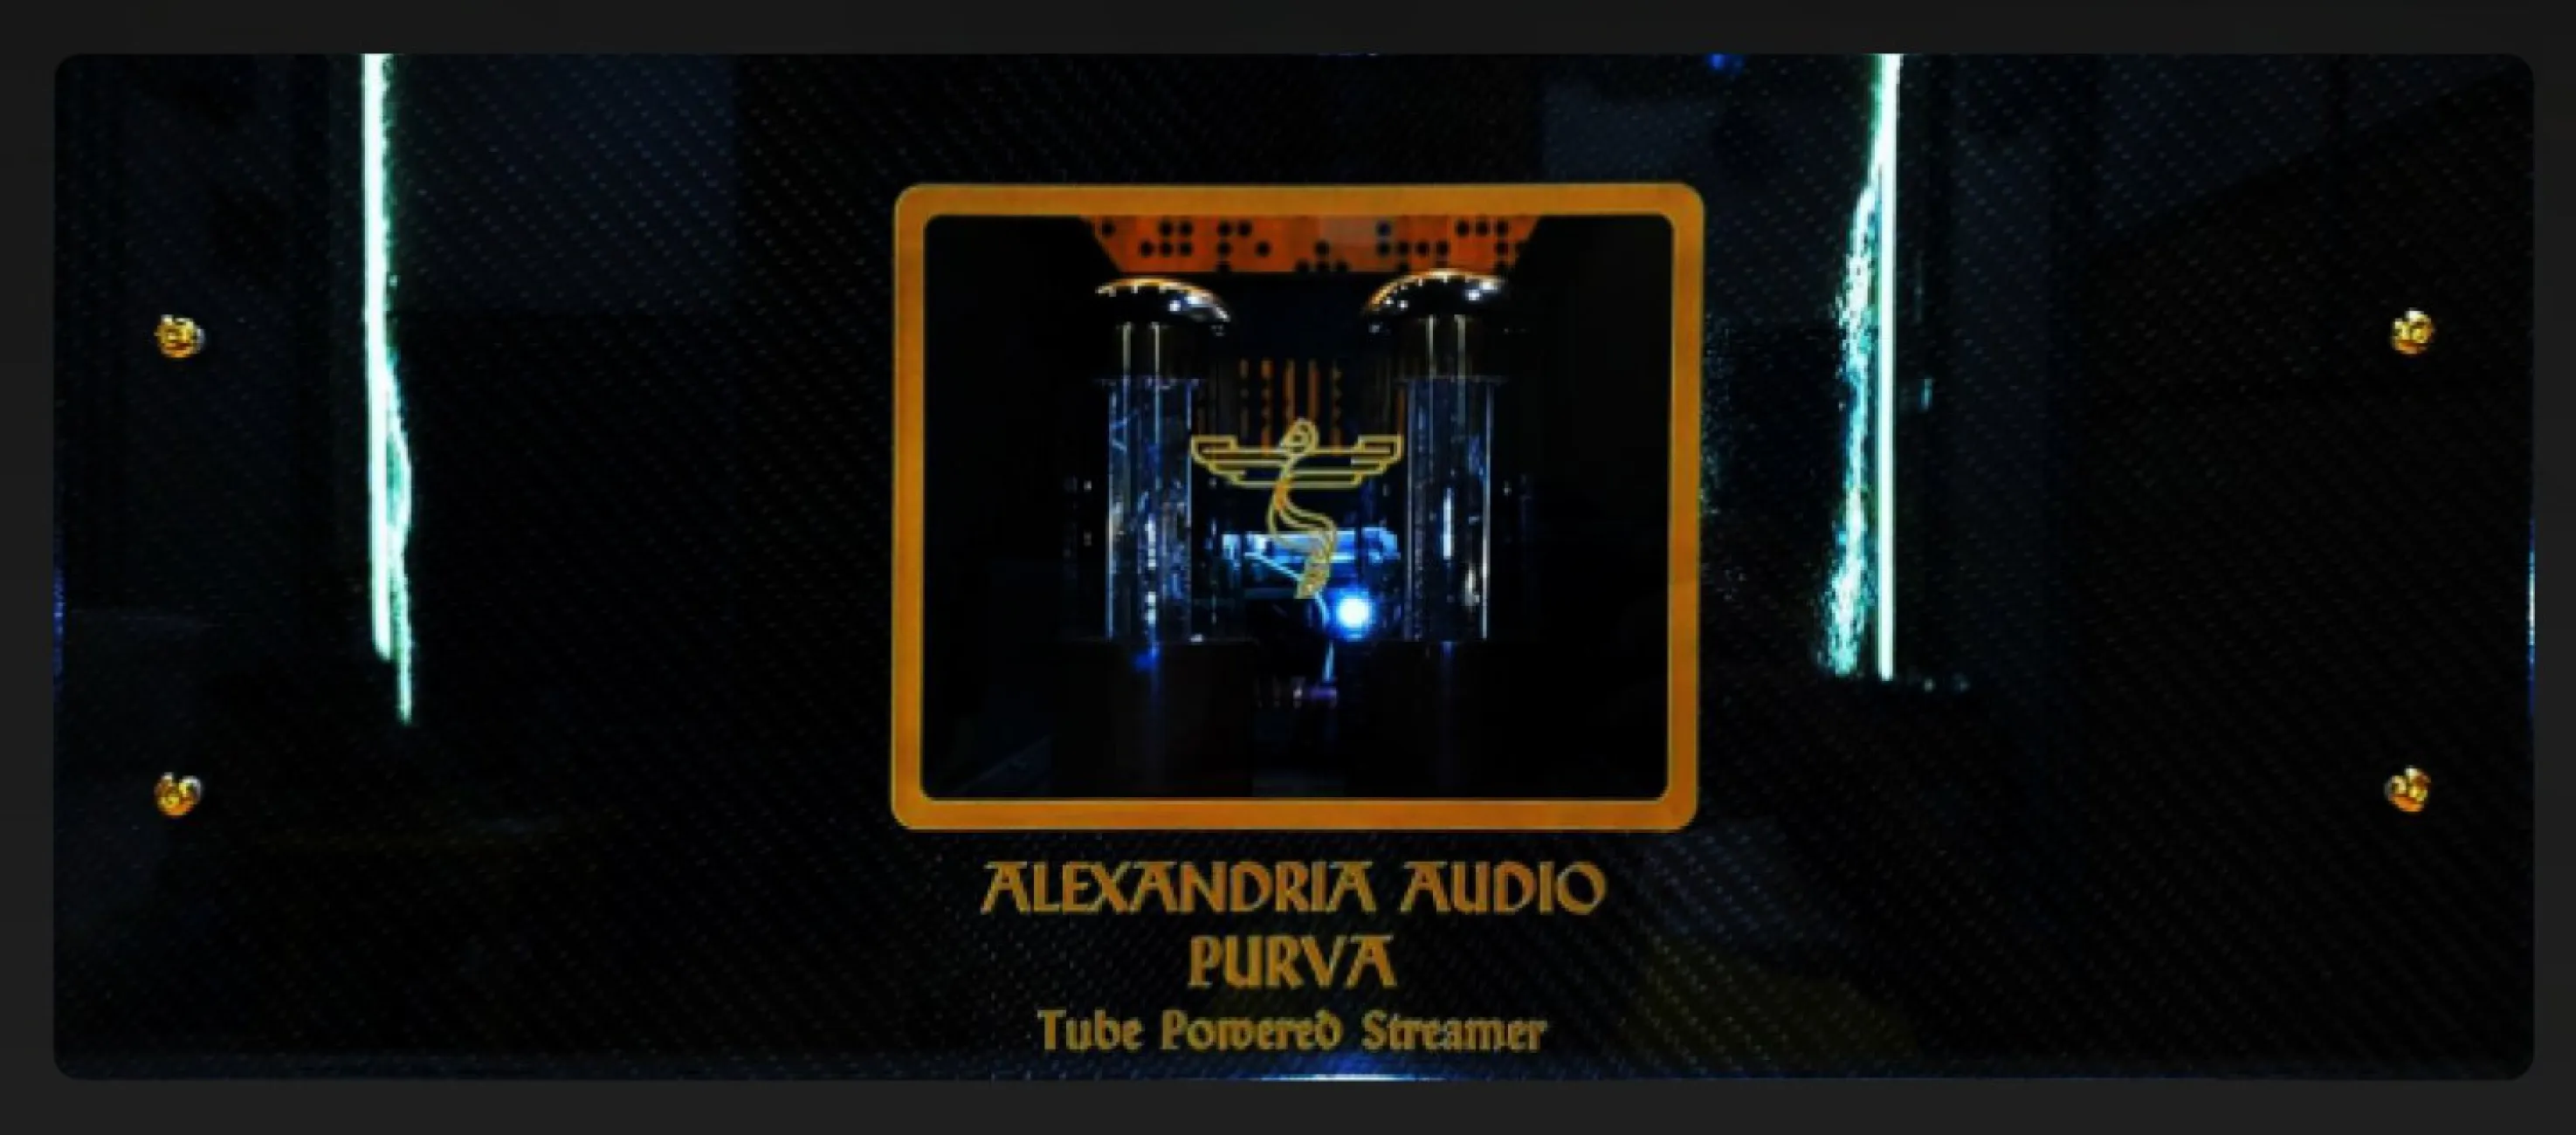 STREAMER PURVA purva tbe powered streamer alexandria audio4